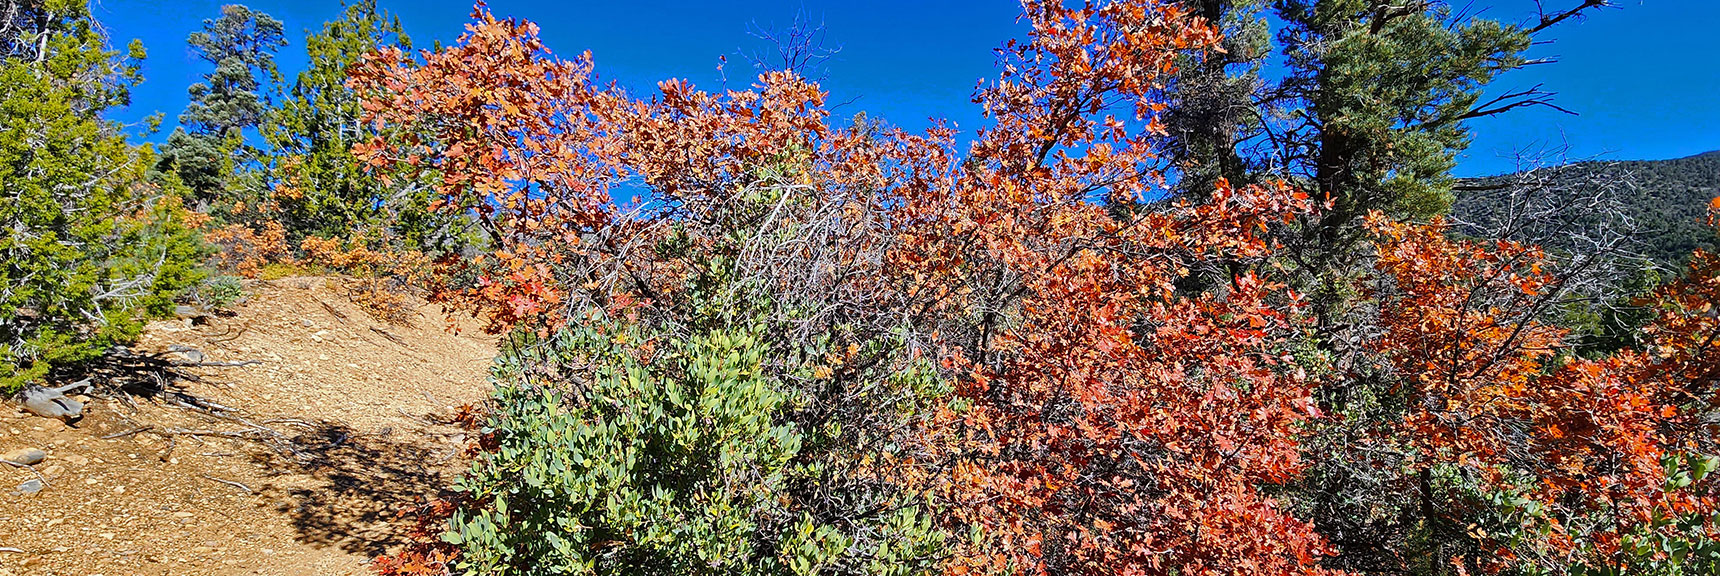 Gambles Oak Leaves Losing Fall Coloring 2nd Week in November | Lovell Canyon Loop Trail | Lovell Canyon Nevada